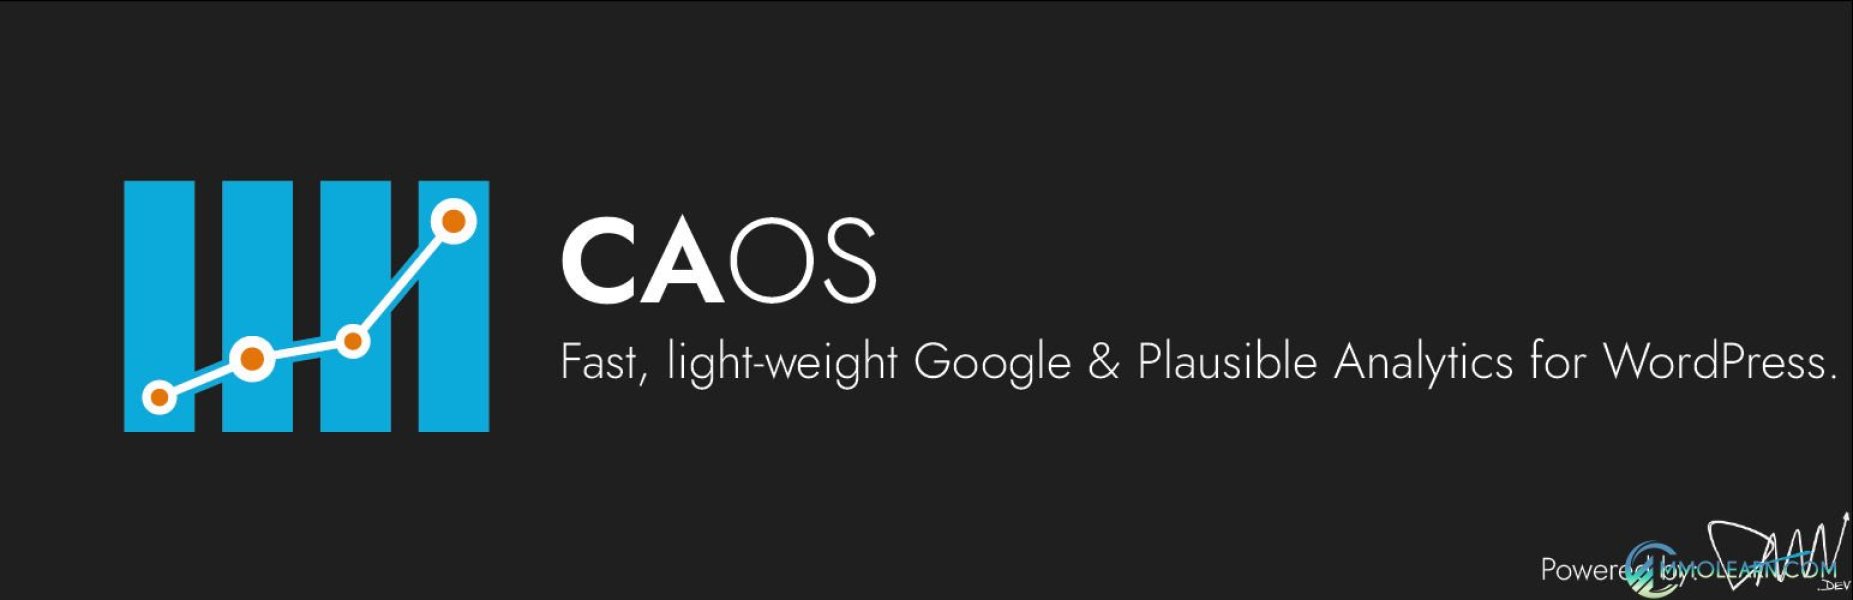 CAOS Stealth Upgrade - Host Google Analytics Locally for Wordpress